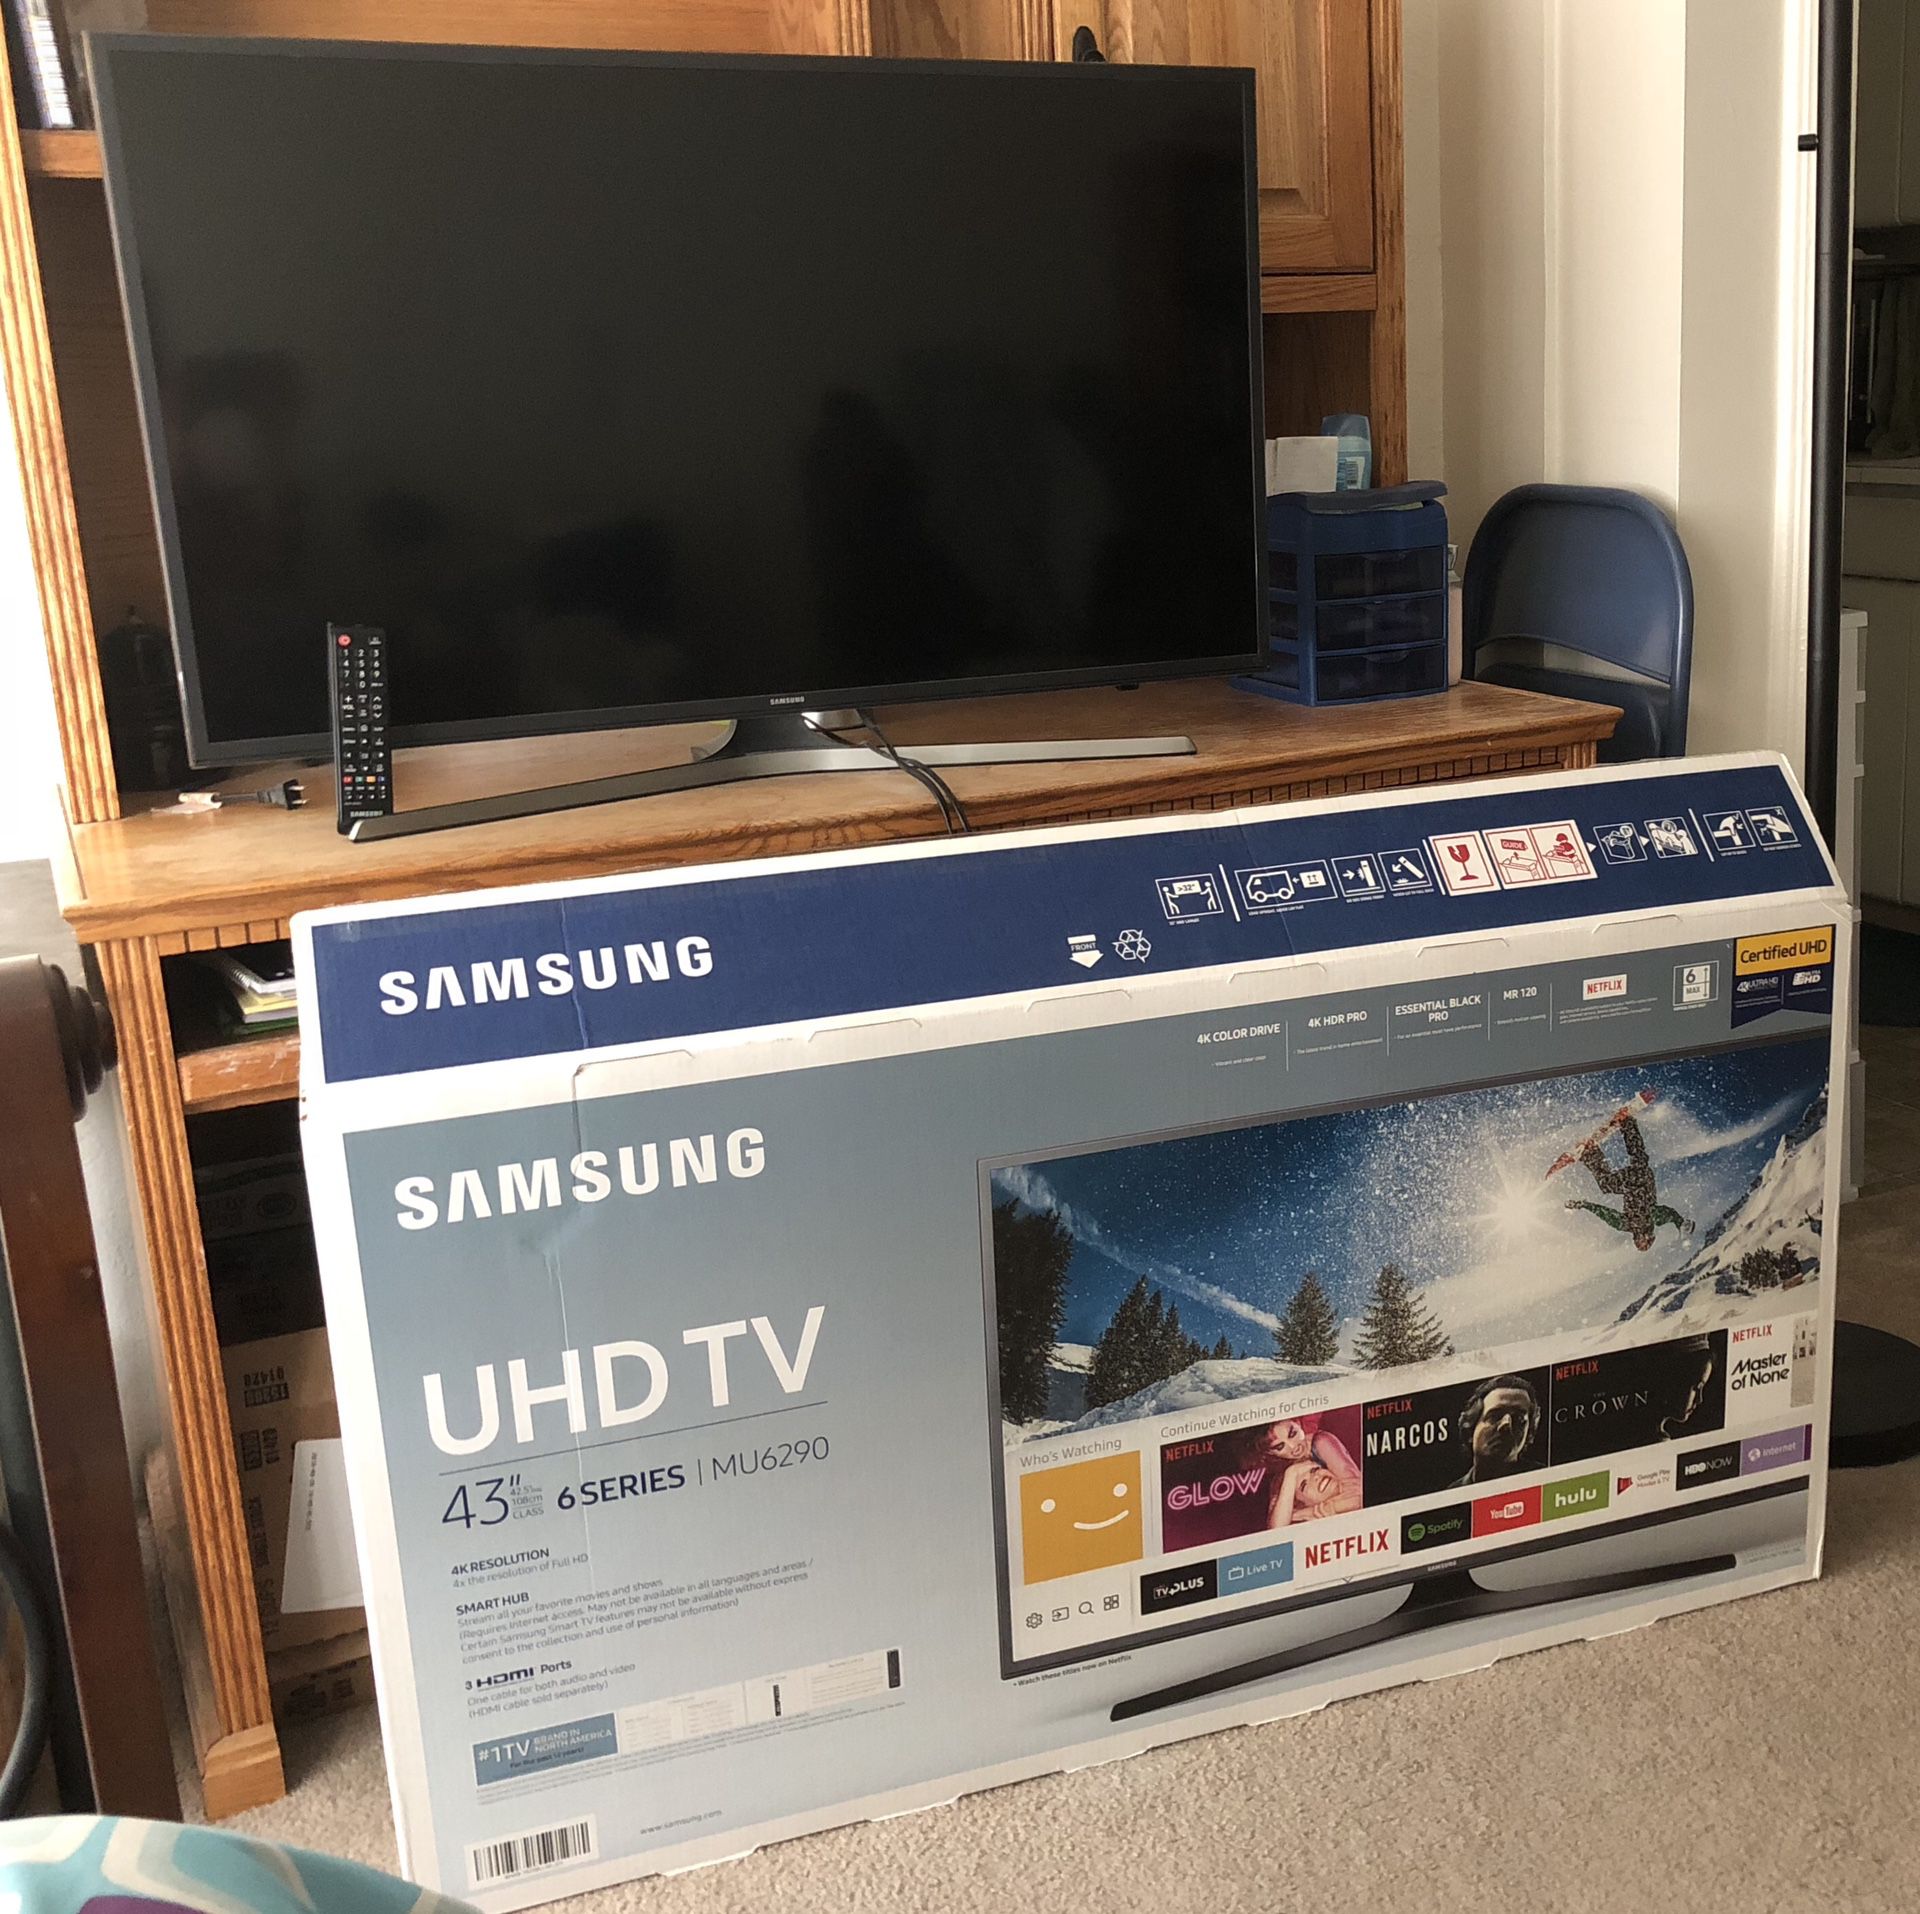 Samsung 43” UHD TV